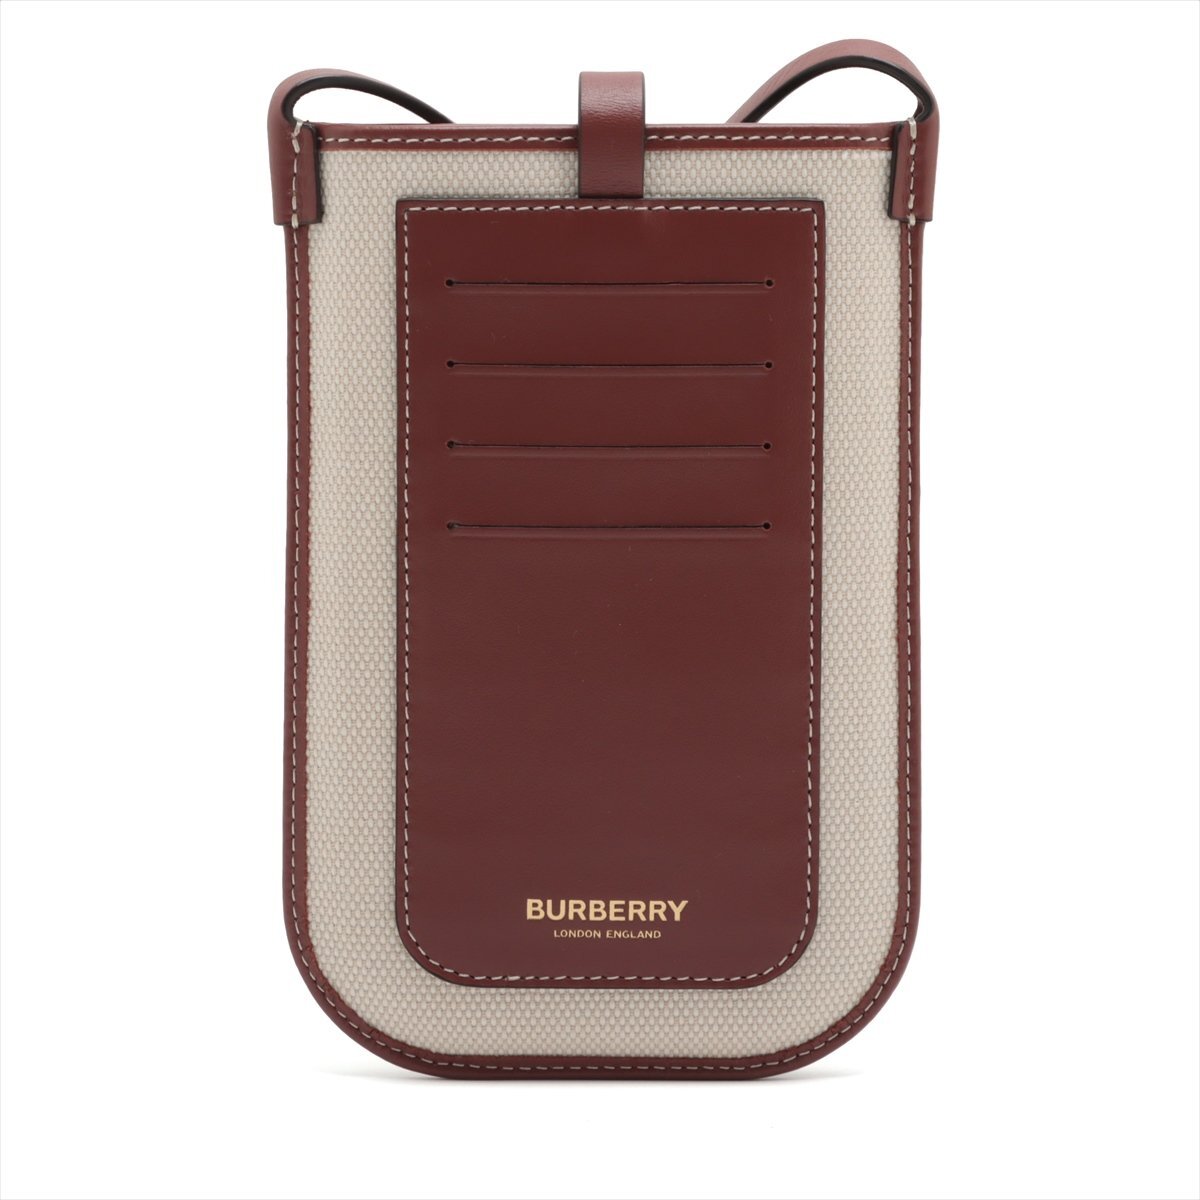 # не использовался # Burberry # кожа парусина сумка на плечо наклонный .. phone кейс смартфон плечо Brown женский MMM L28-2